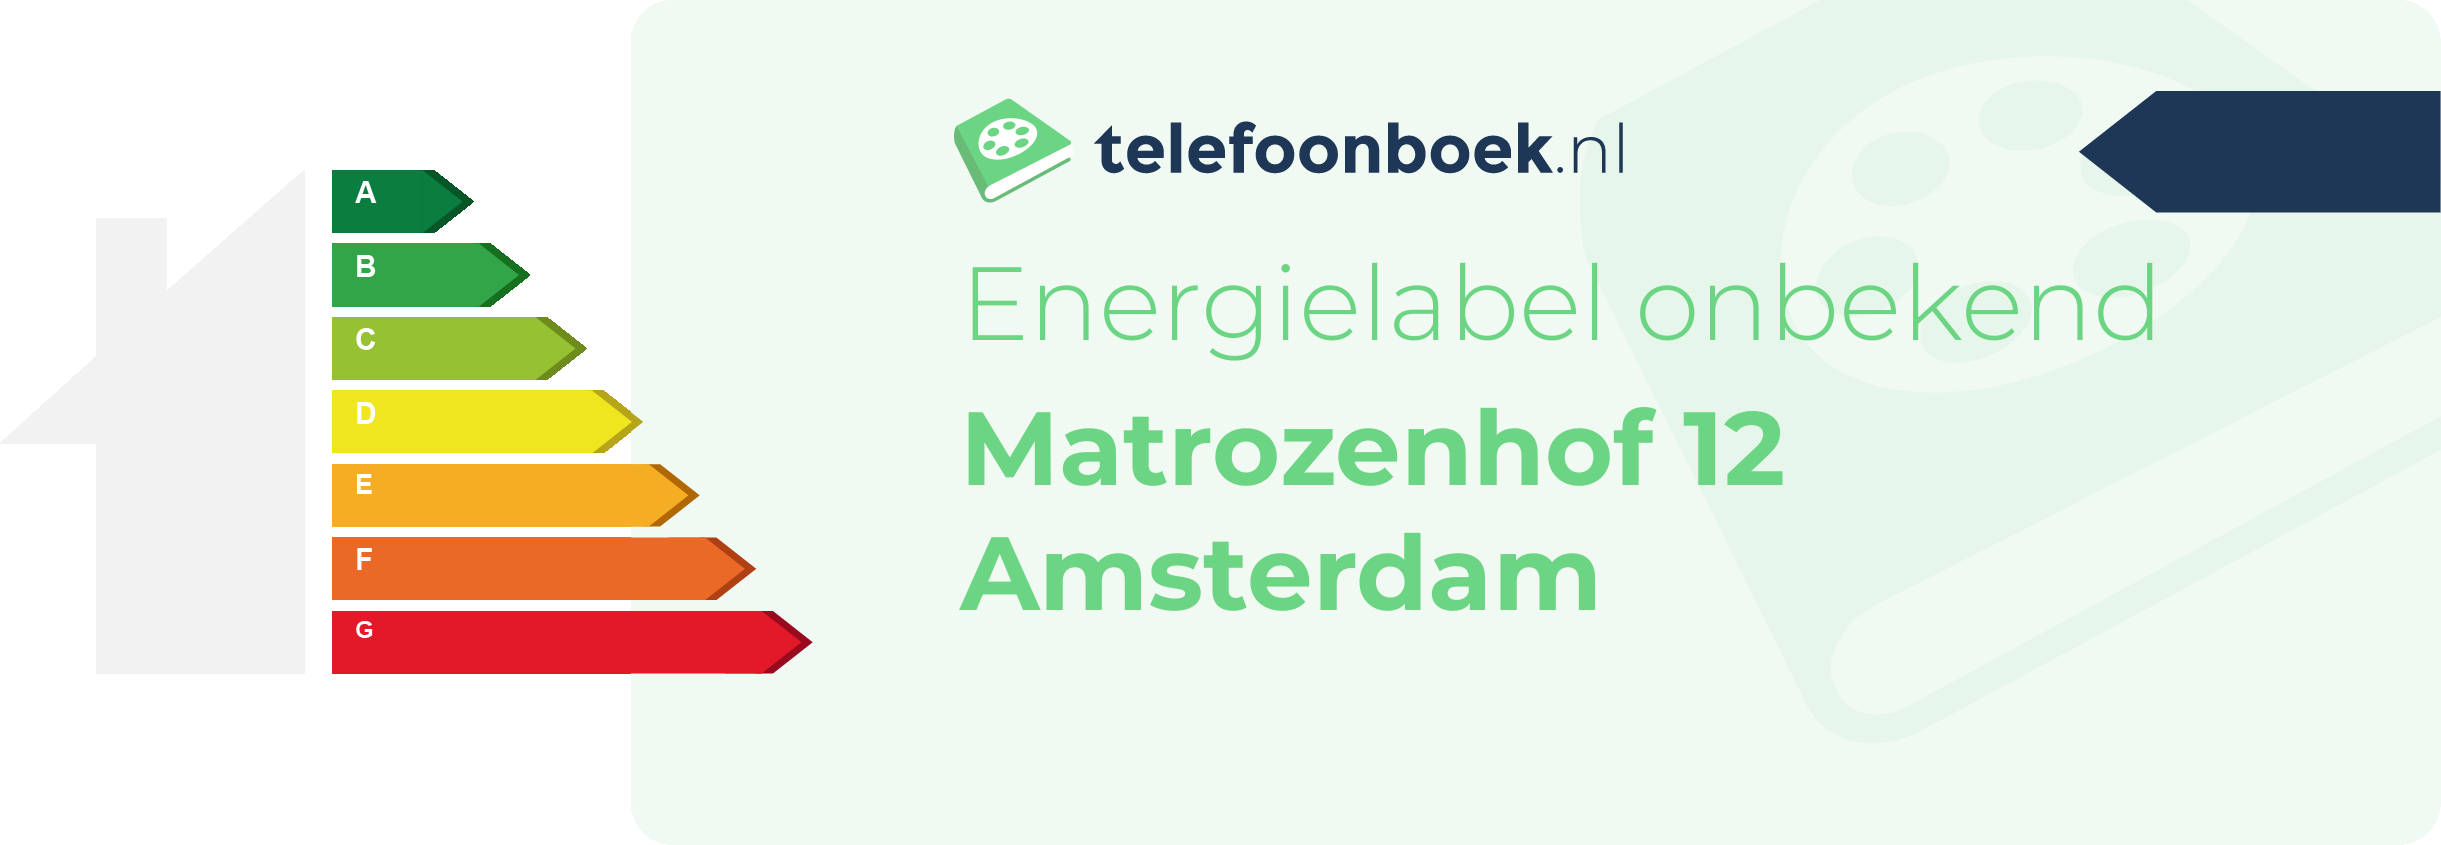 Energielabel Matrozenhof 12 Amsterdam